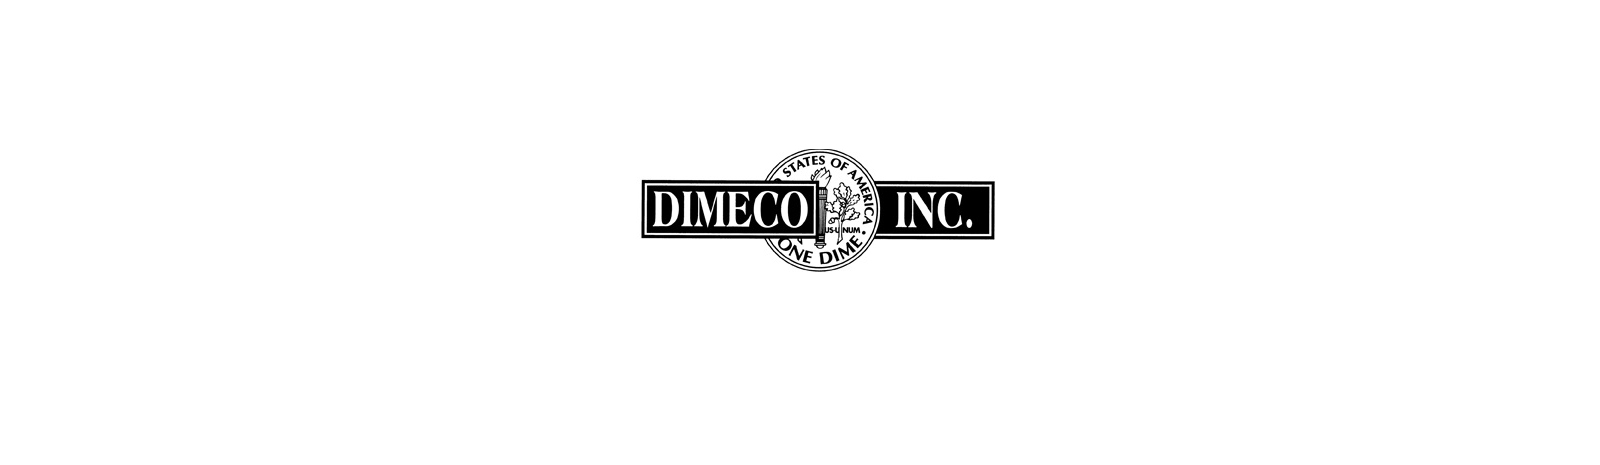 Dimeco, Inc. logo